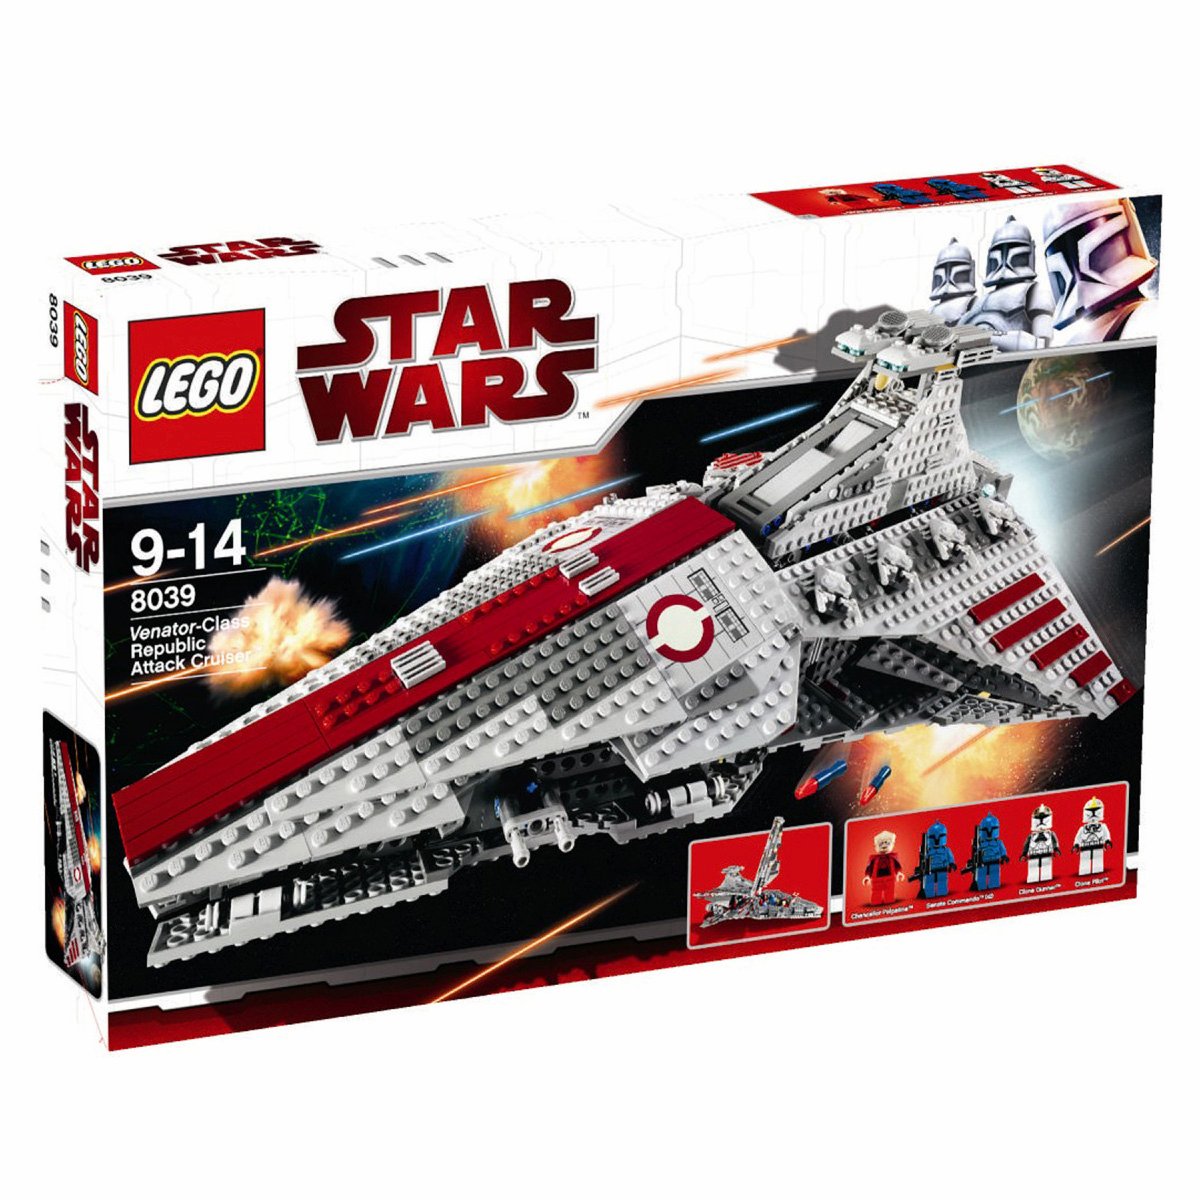 Venator-Class Republic Attack Cruiser Lego